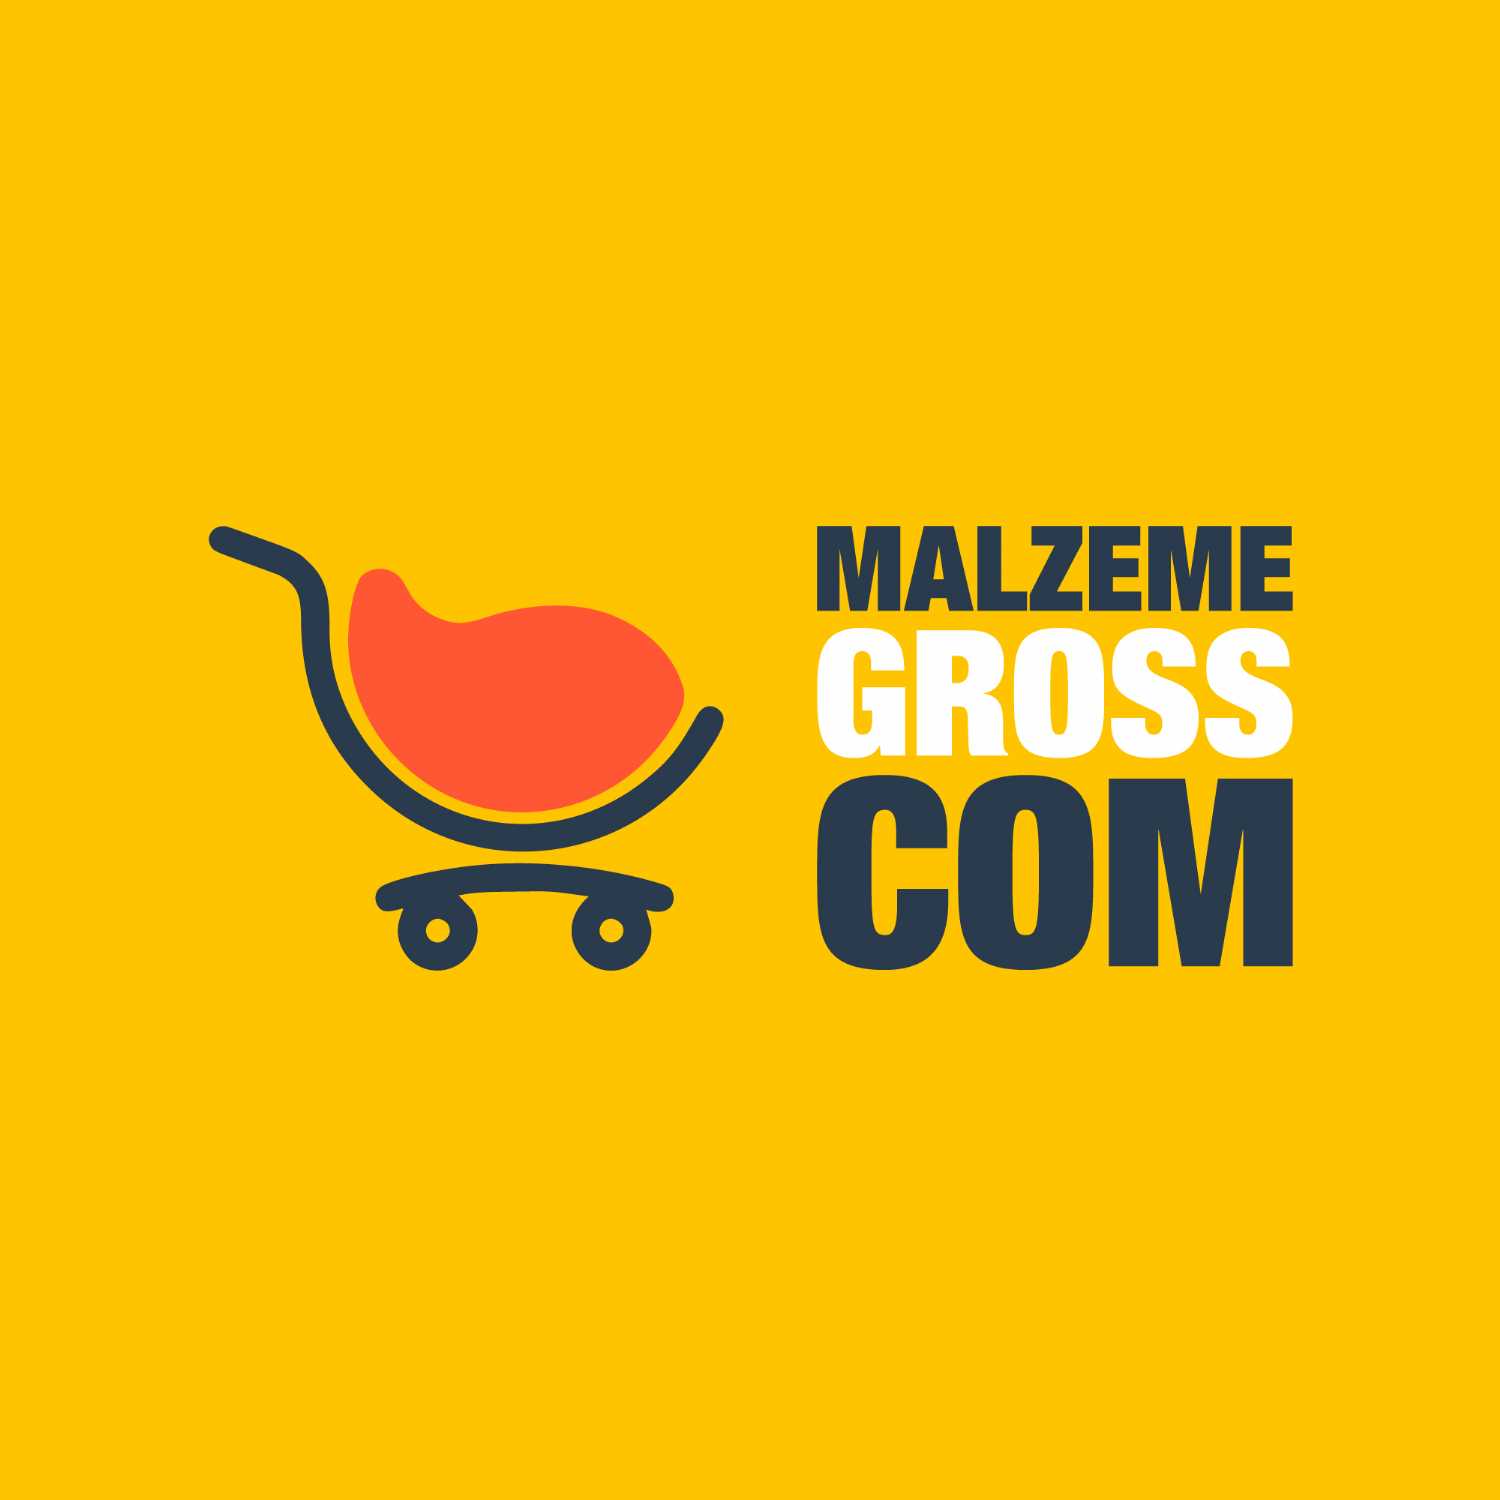 Malzeme Gross Logo